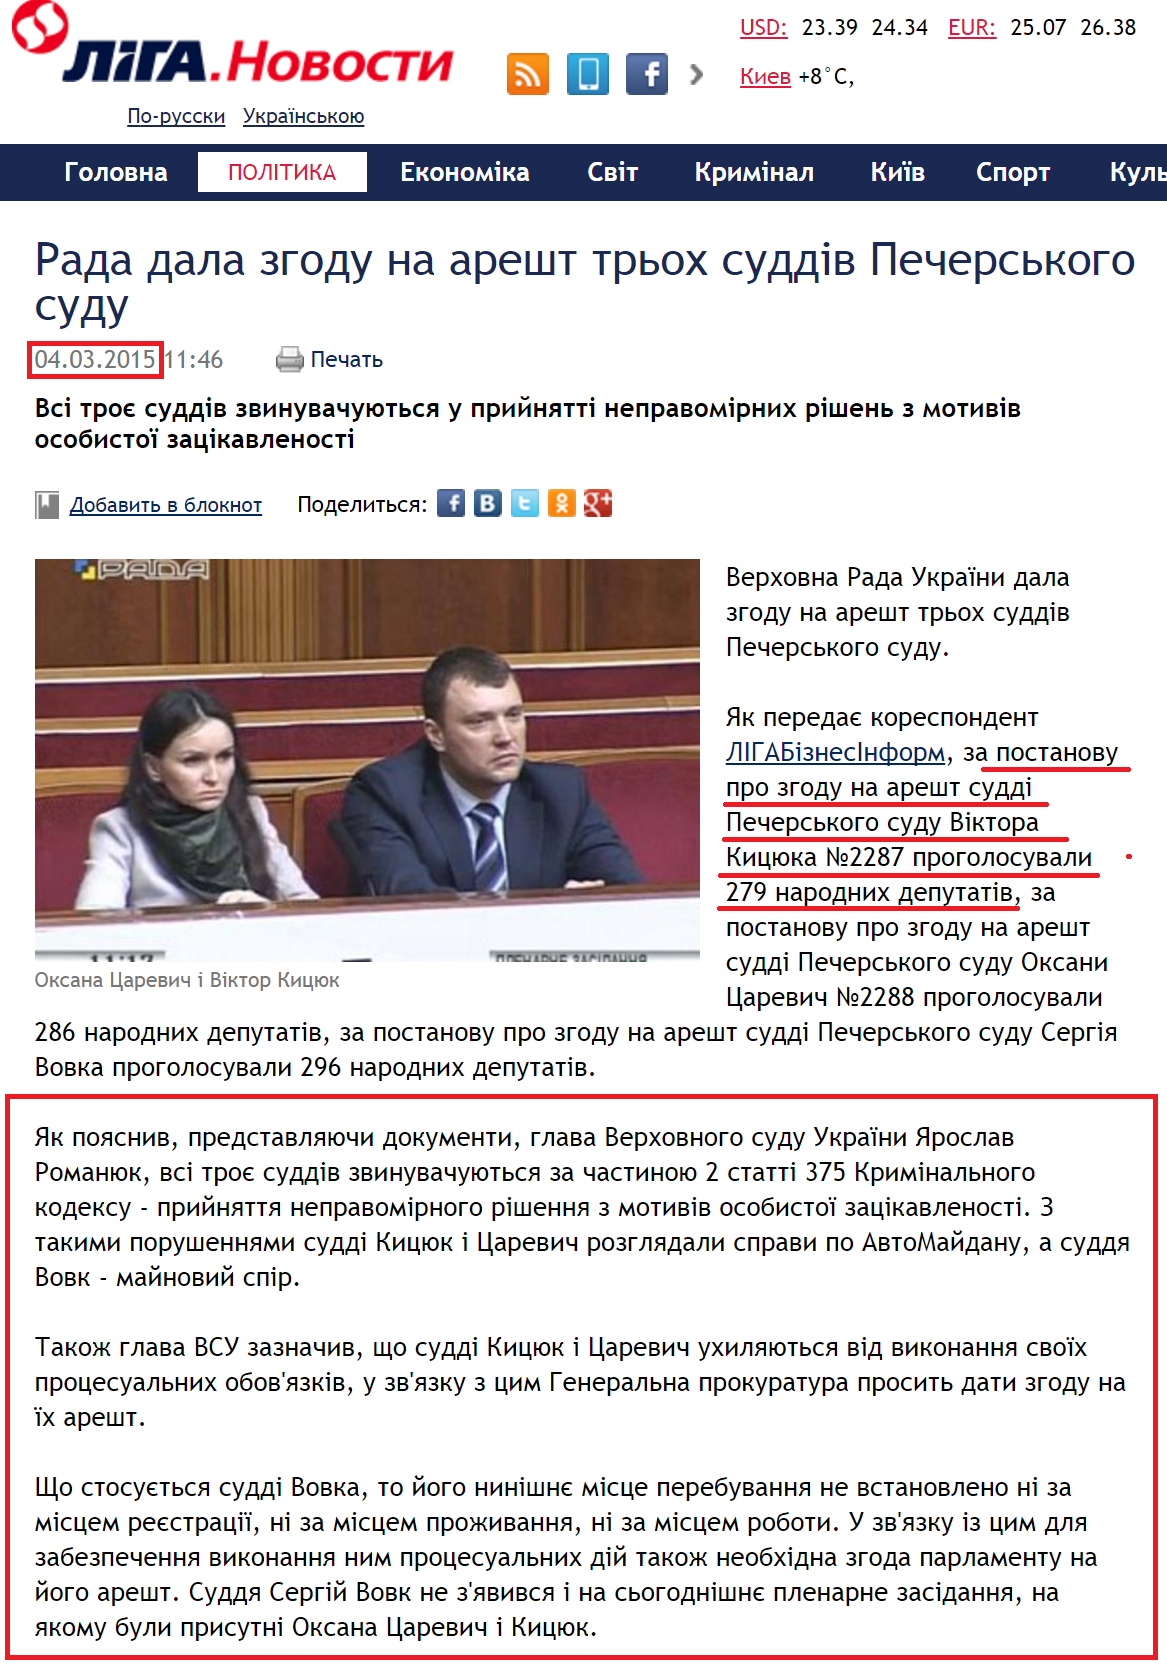 http://news.liga.net/ua/news/politics/5235307-rada_dala_zgodu_na_aresht_trokh_sudd_v_pecherskogo_sudu.htm